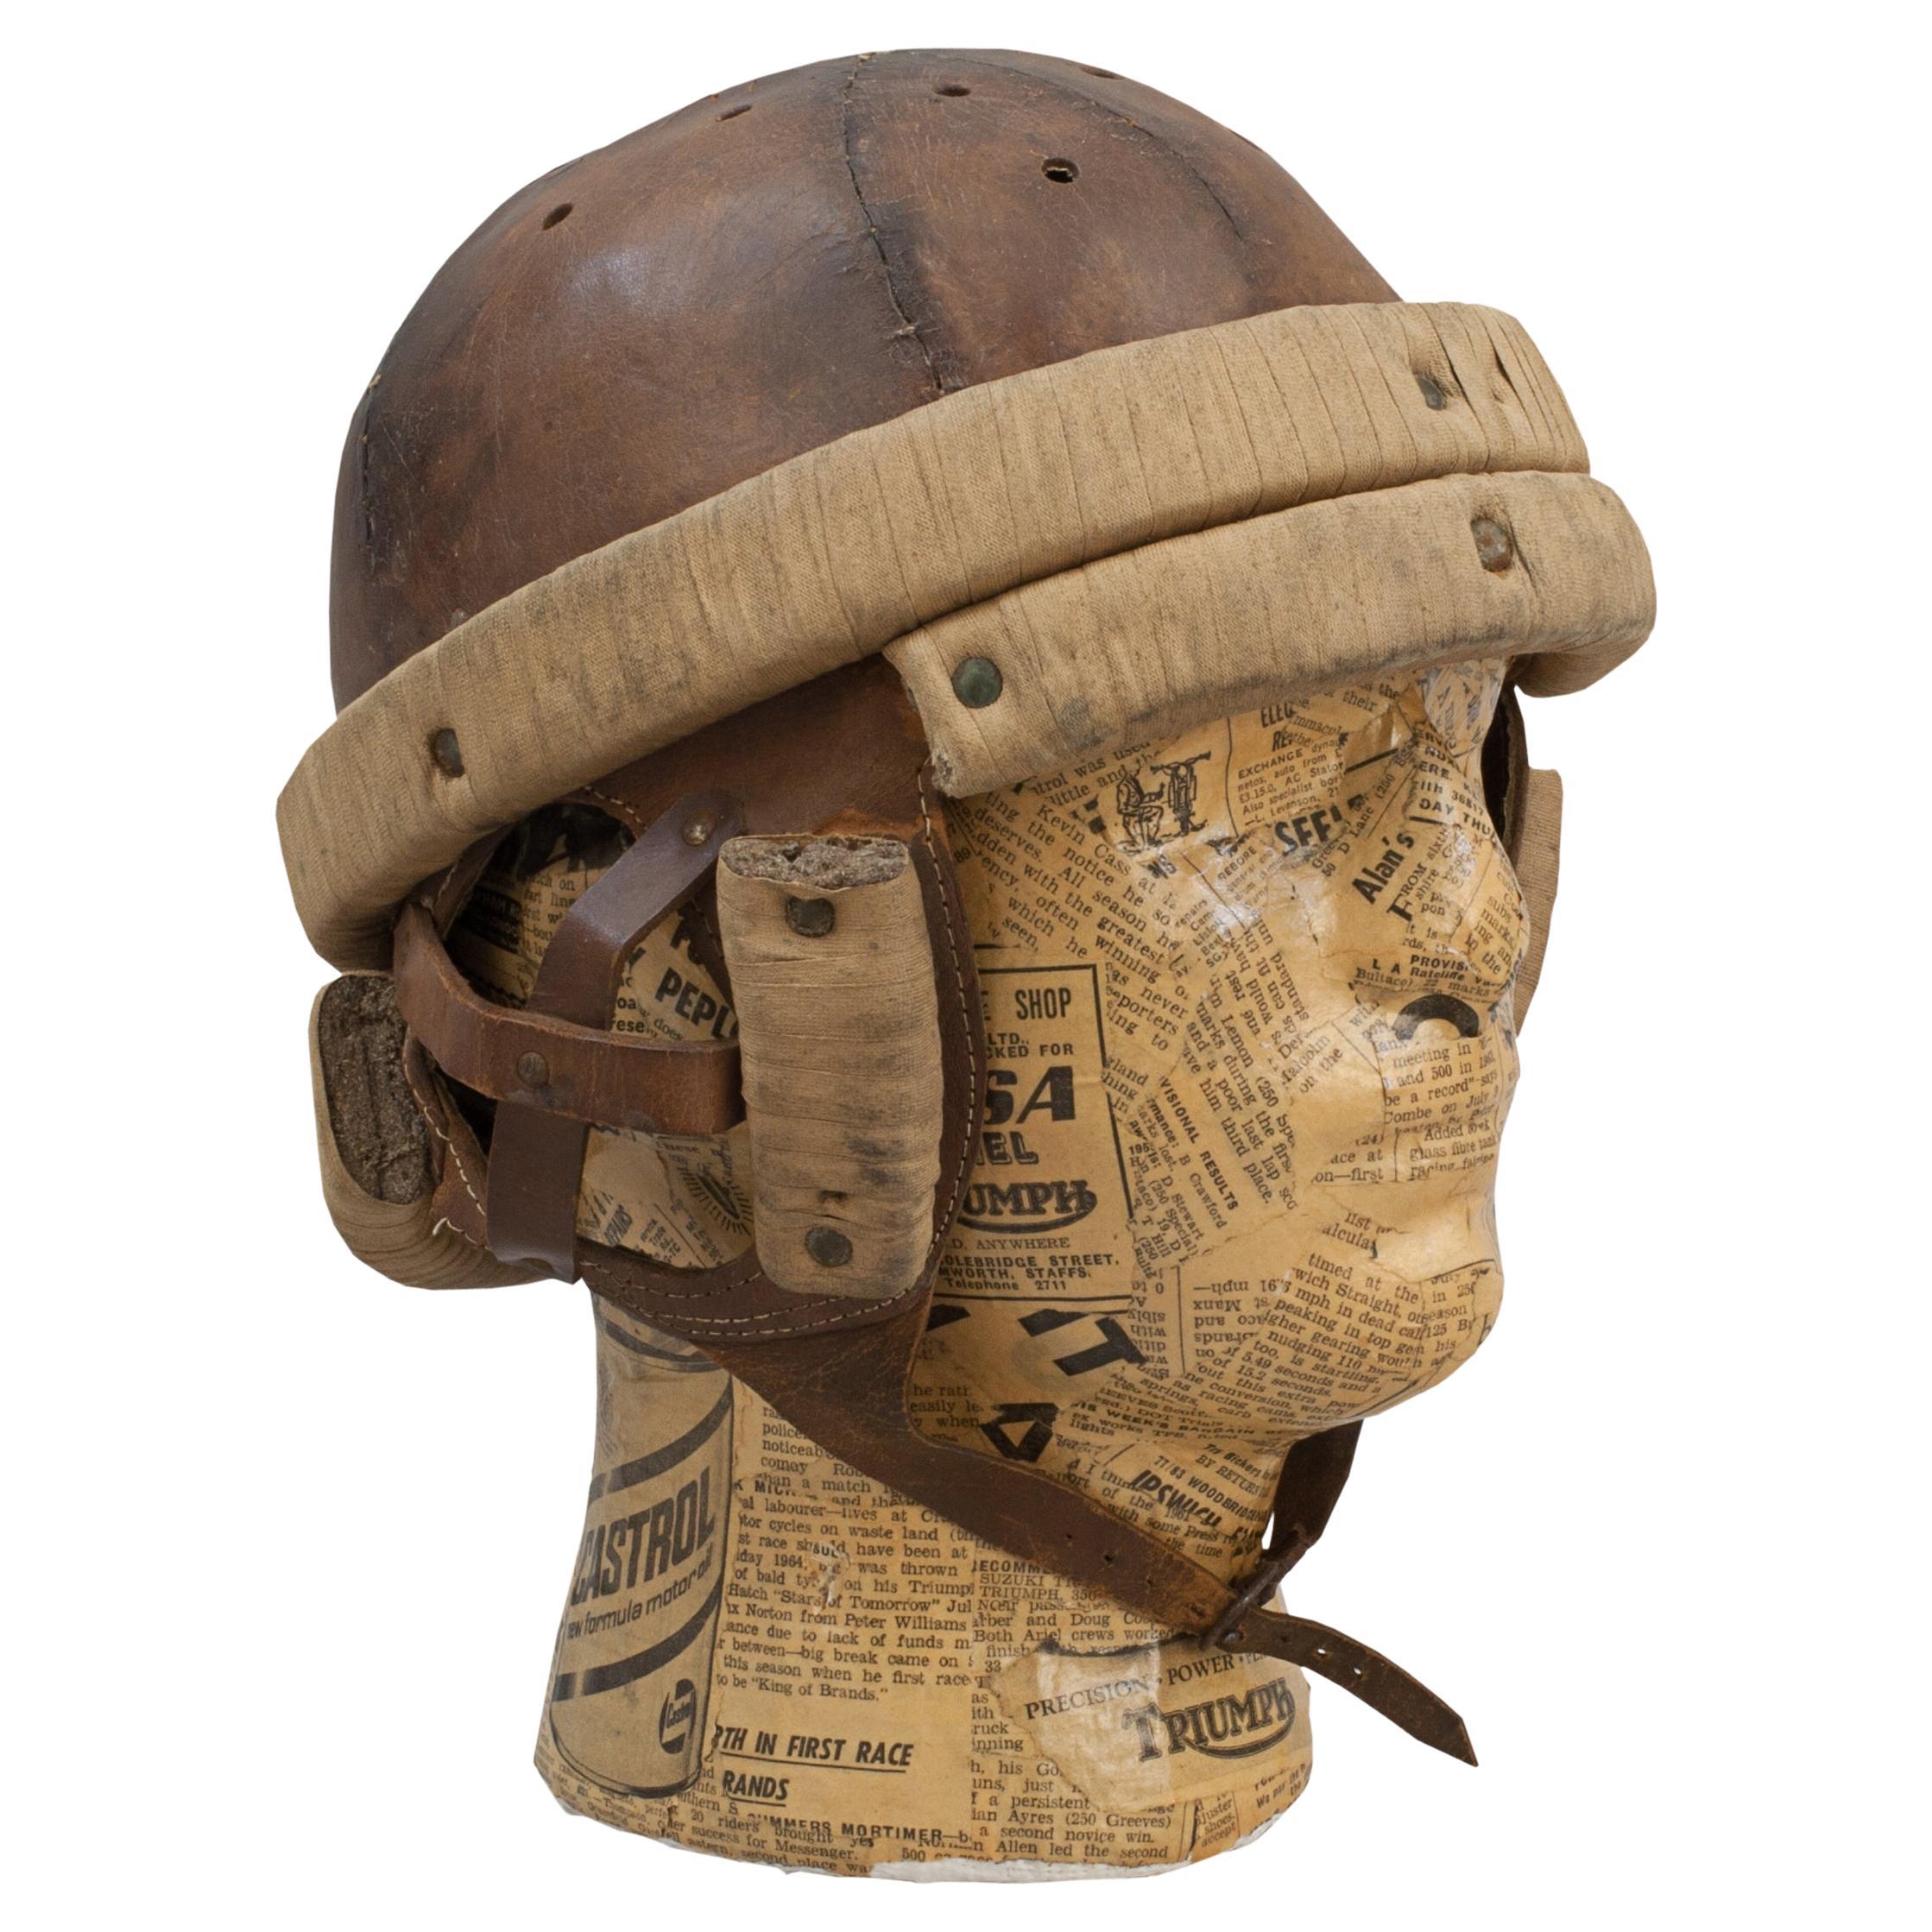 Antique Leather Helmet For Sale